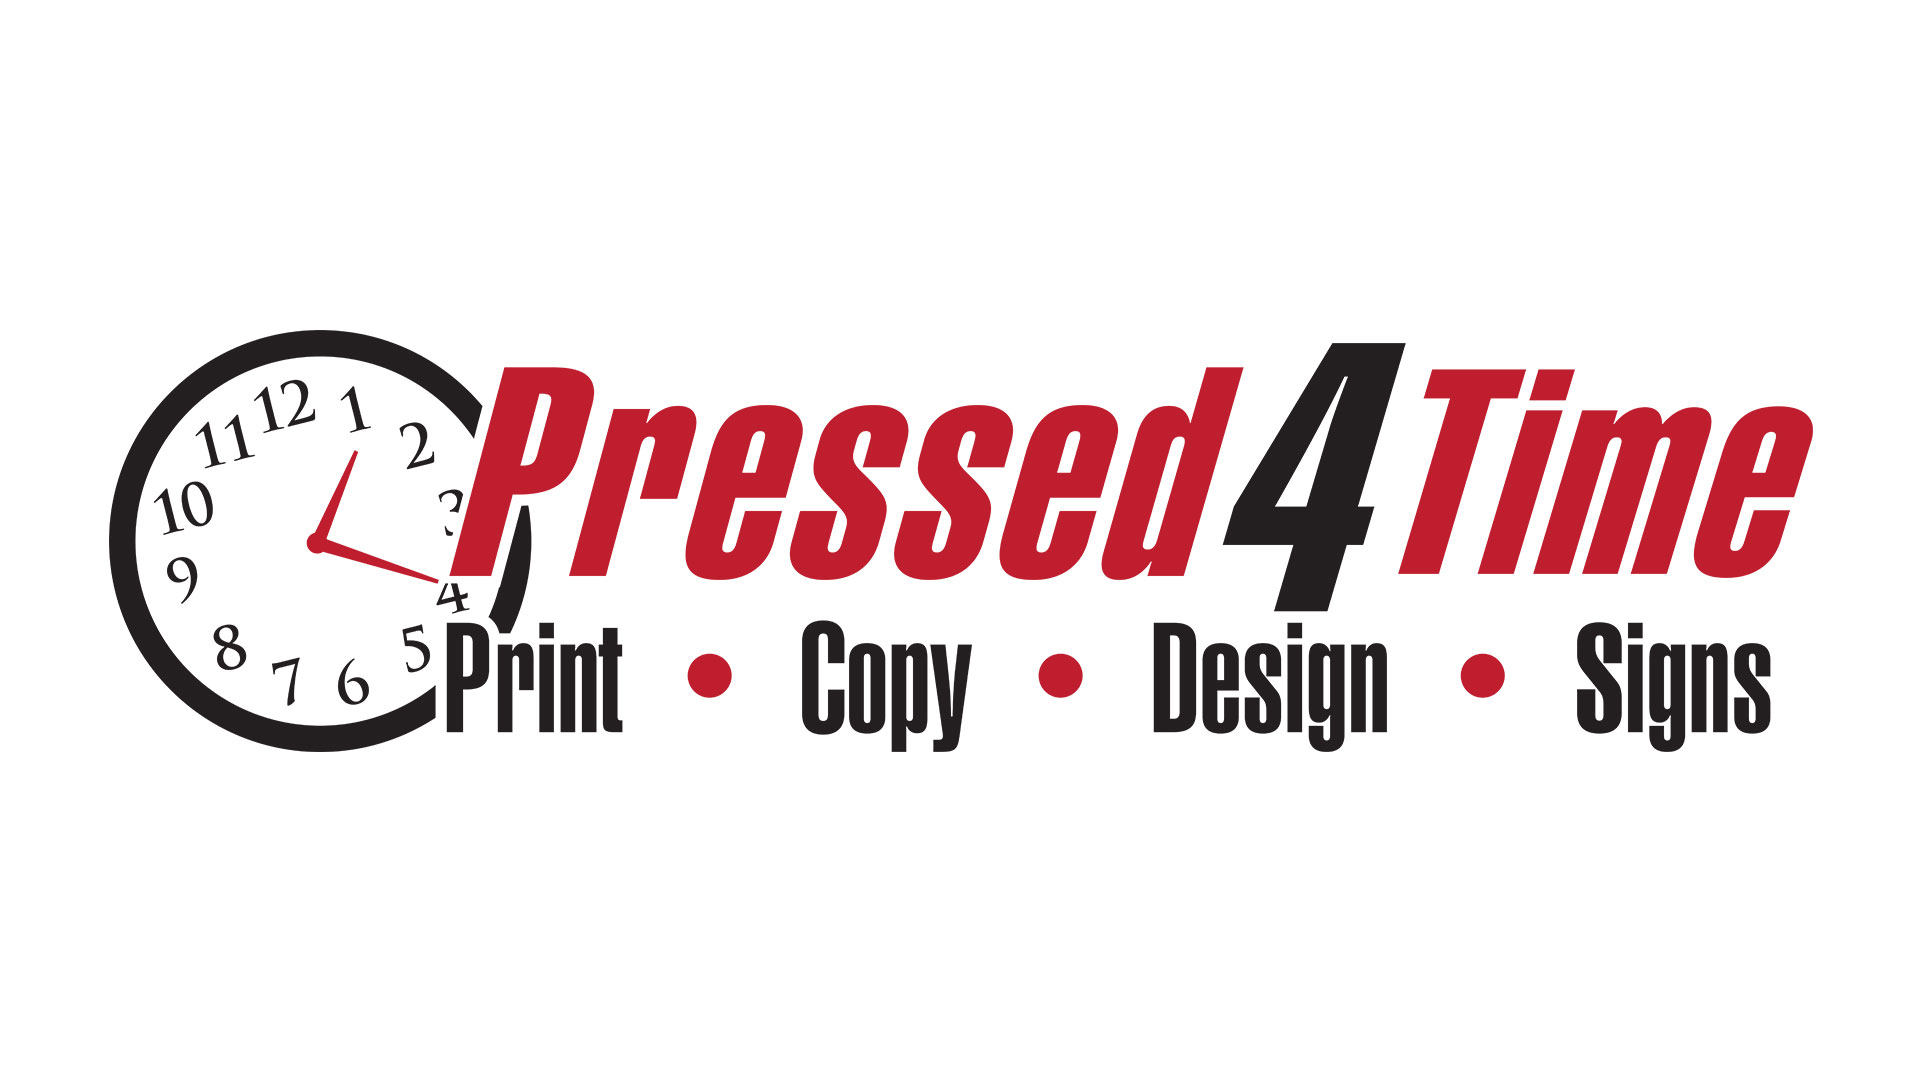 Pressed4Time logo